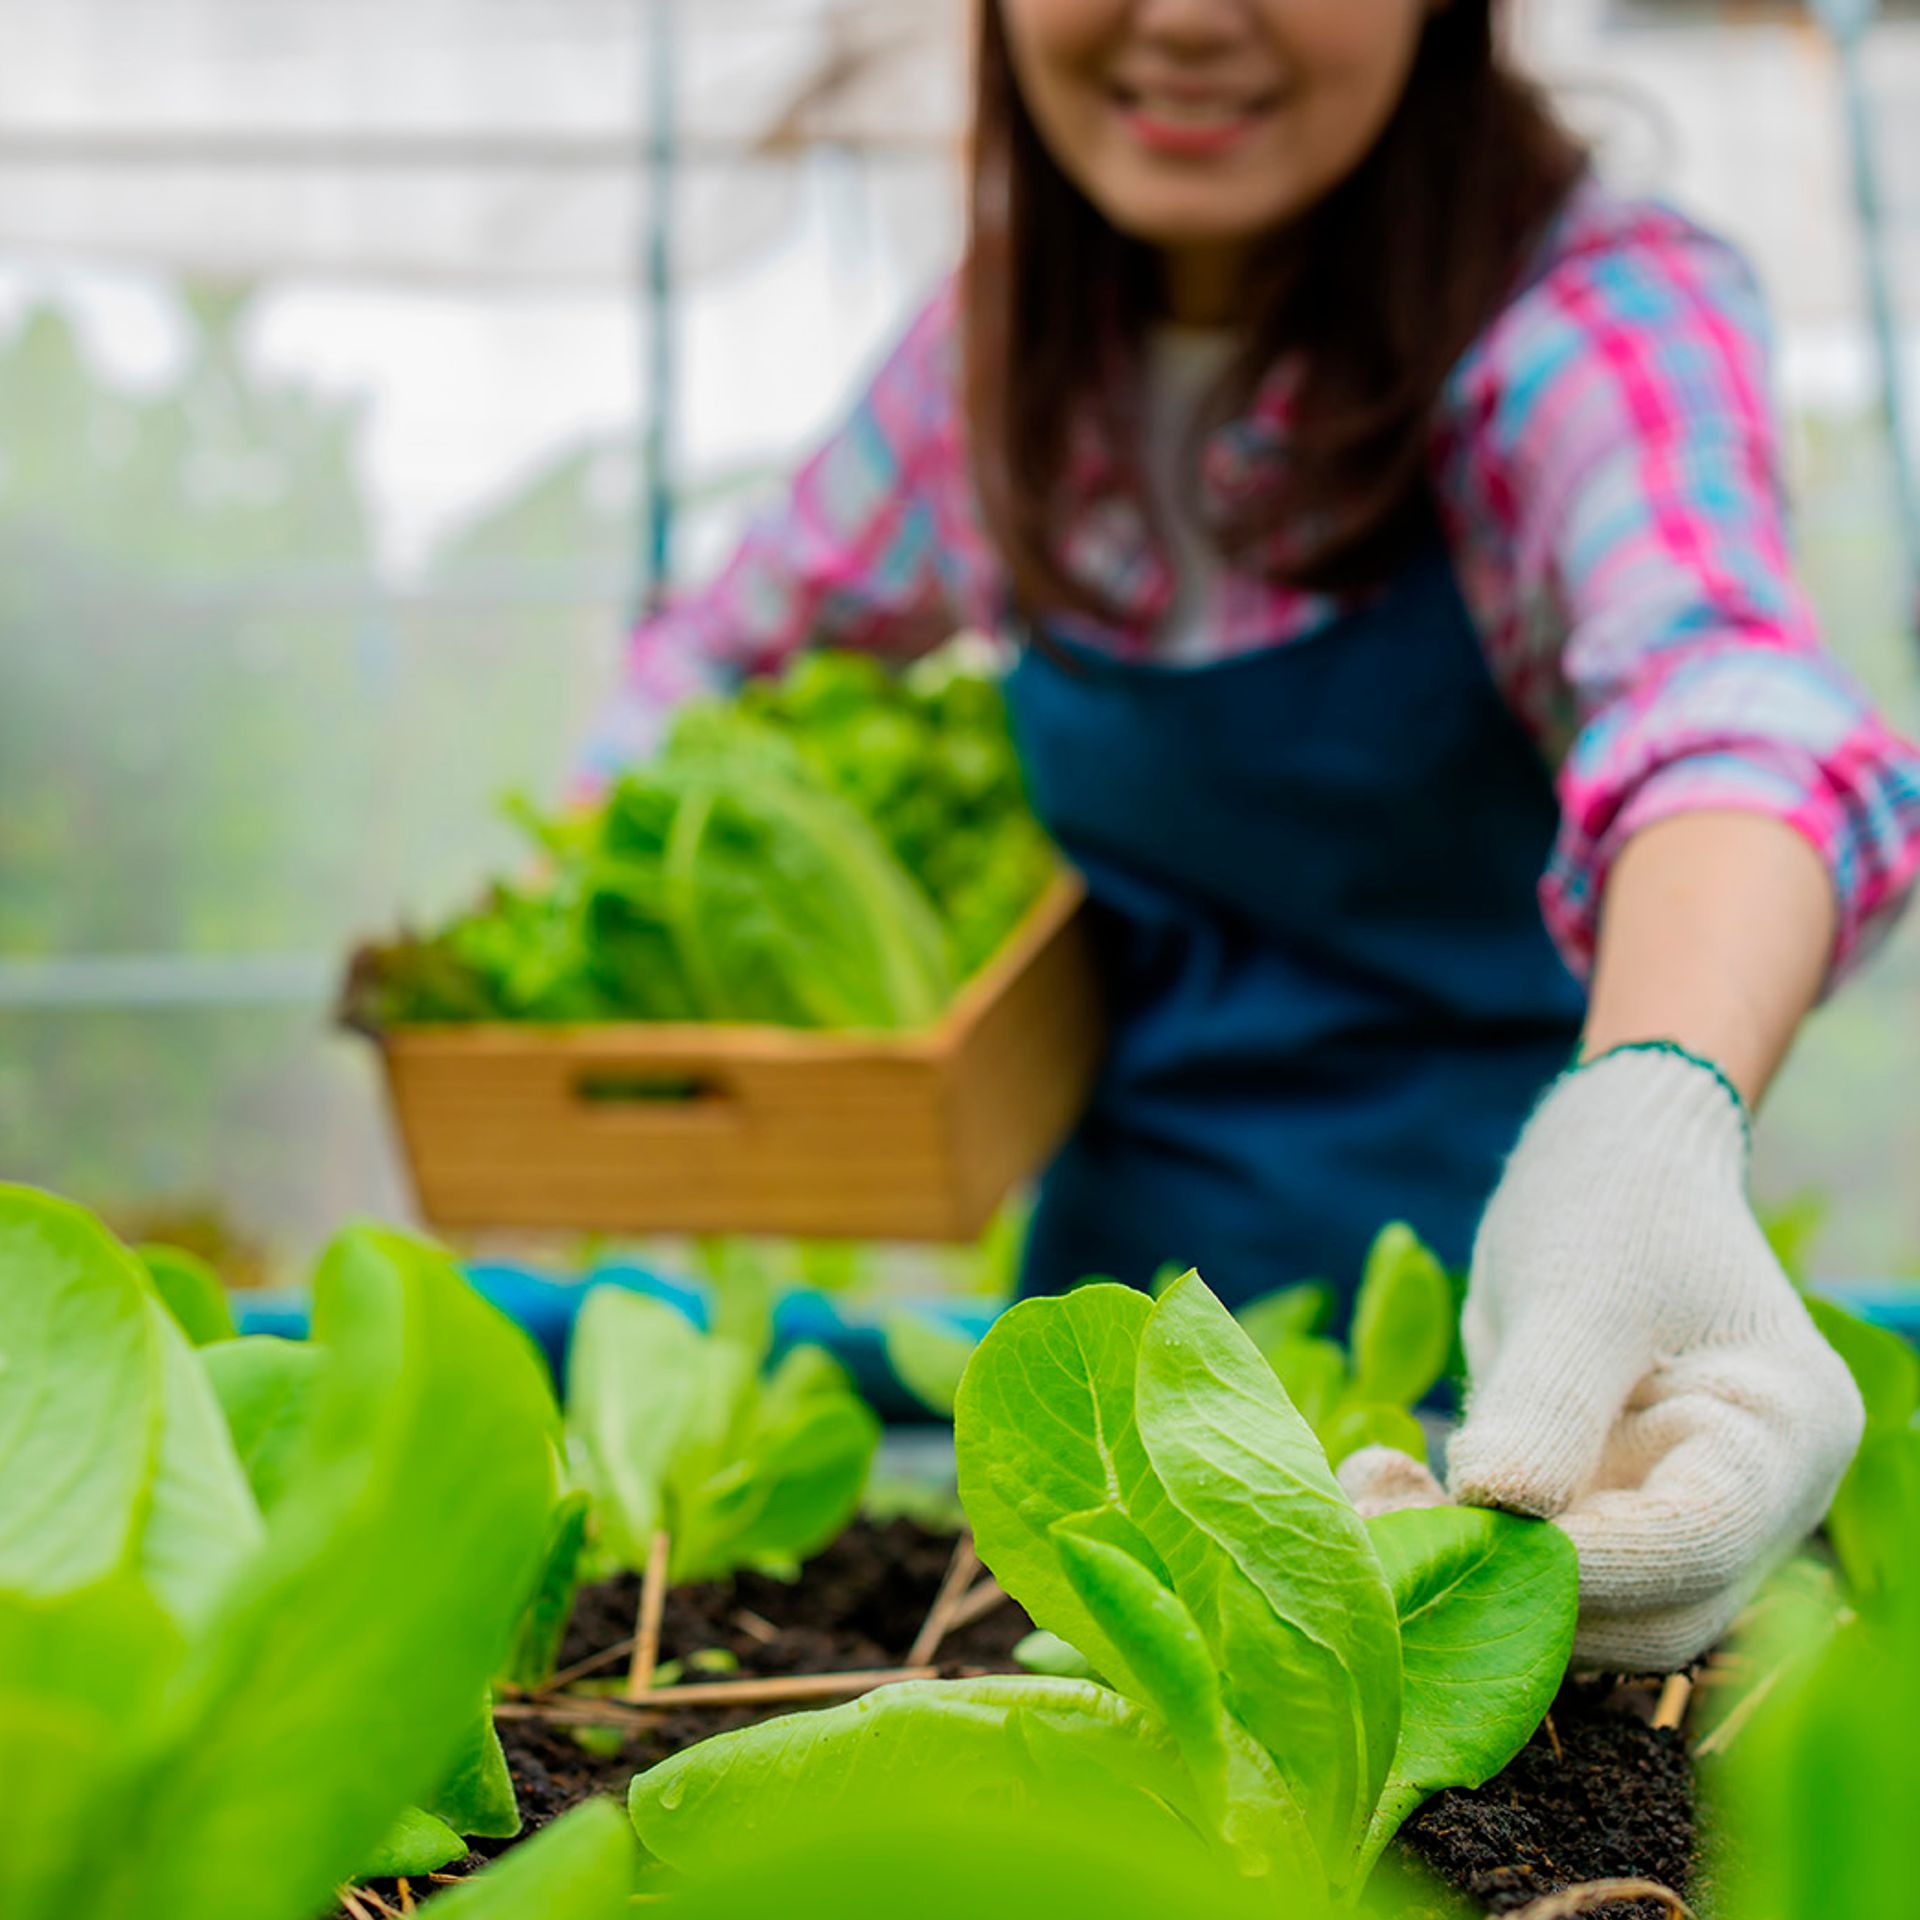 Image of a producer harvesting lettuce plants